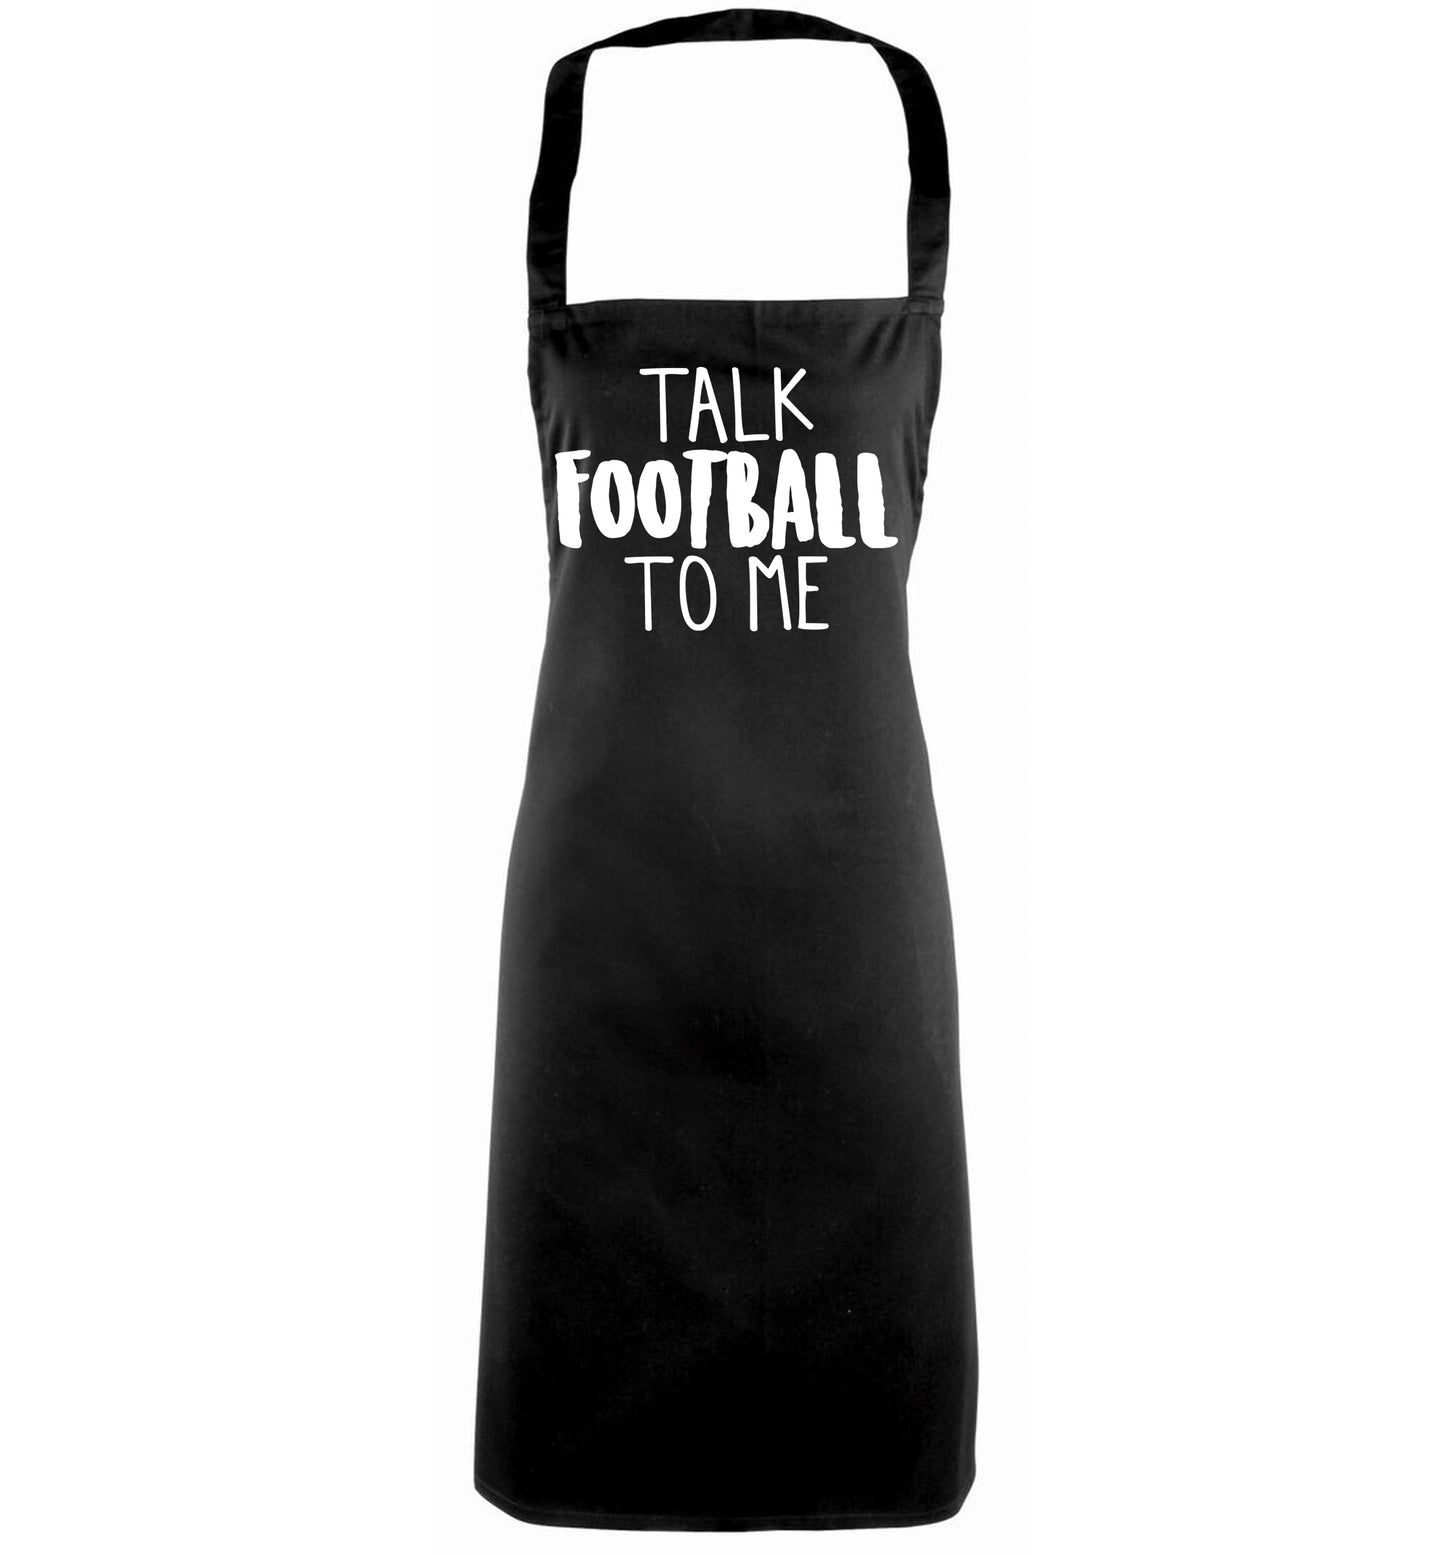 Talk football to me black apron